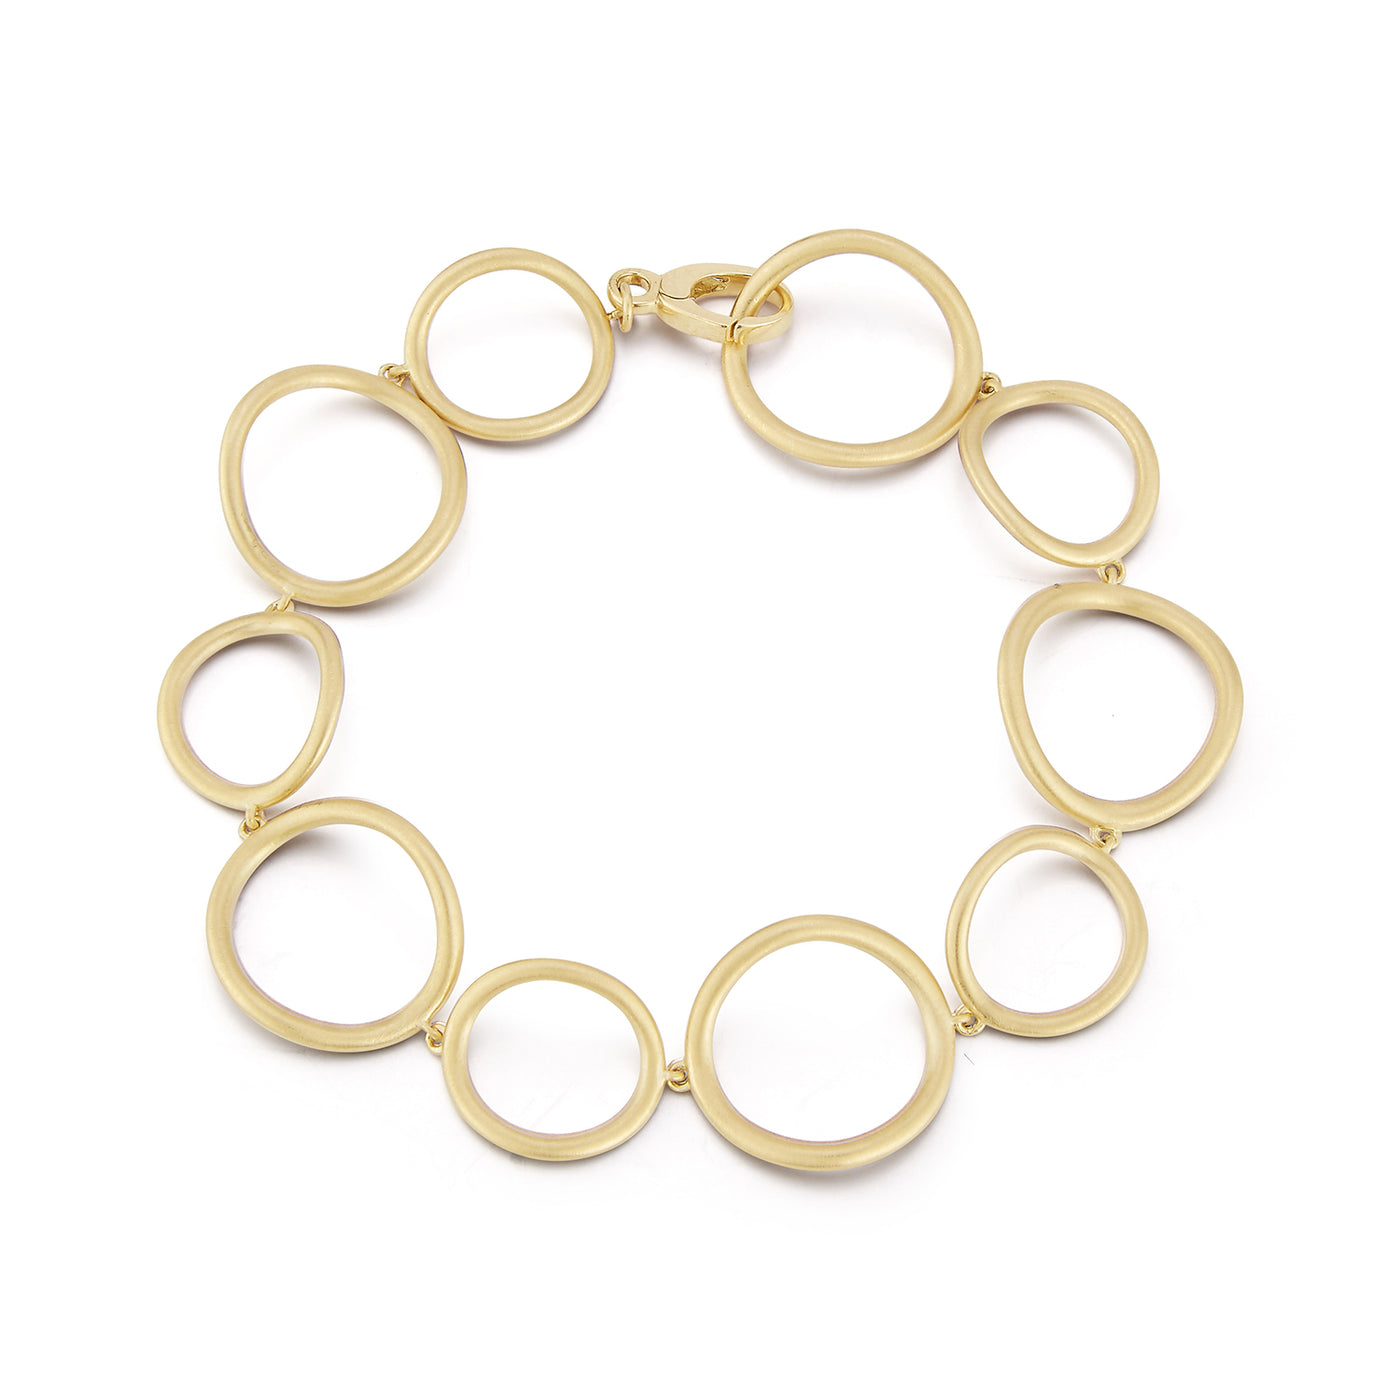 Spiralli Gold Bracelet